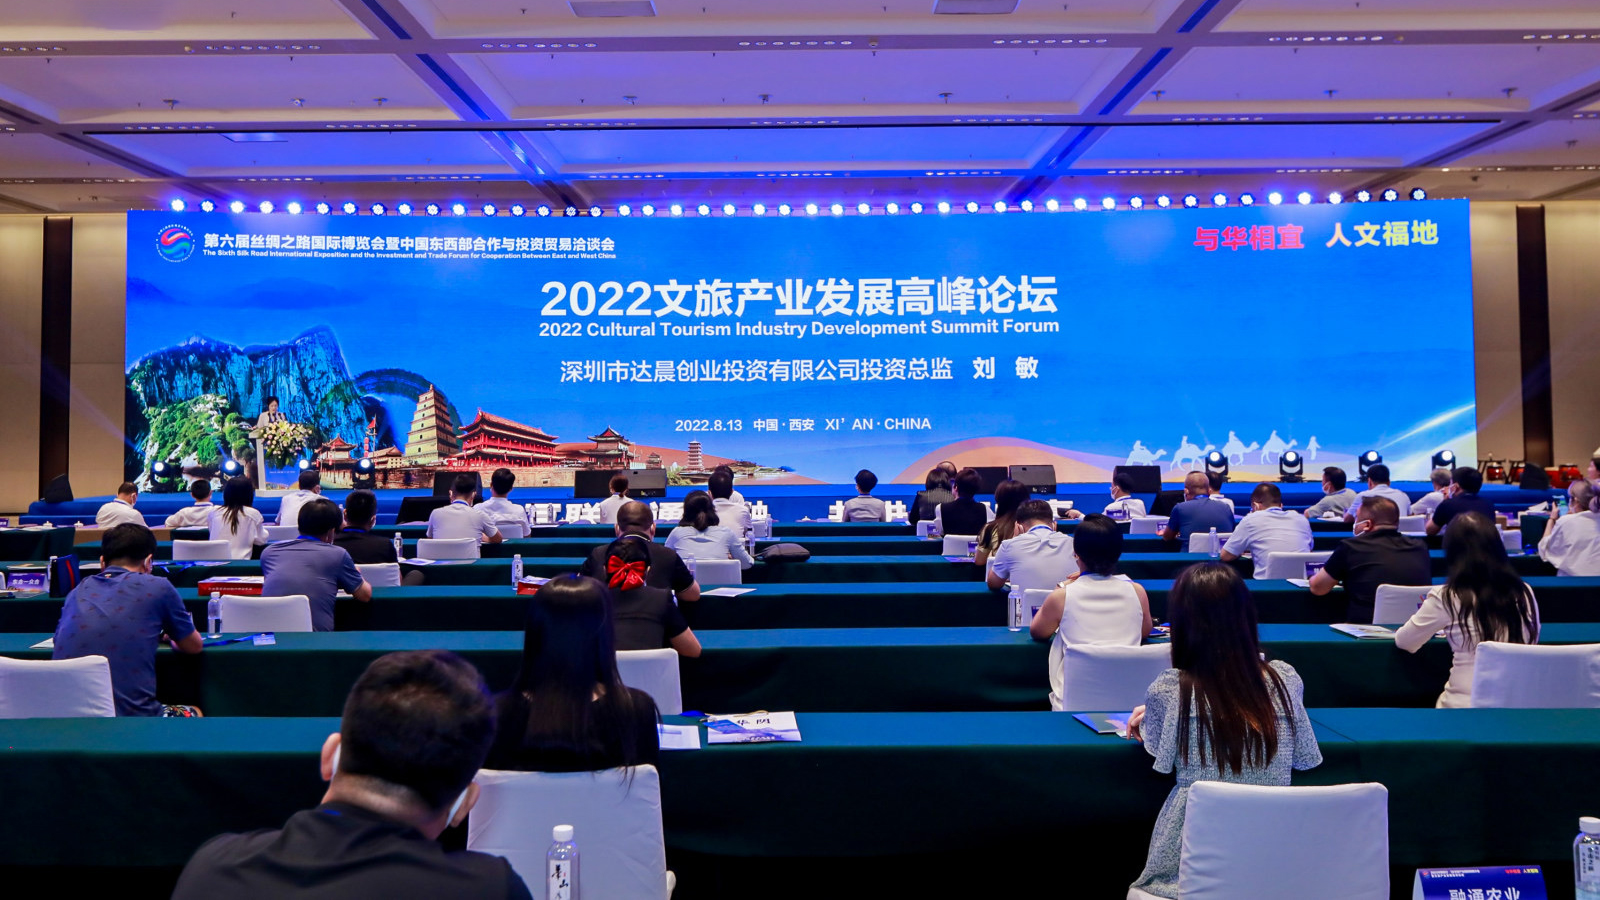 前行科创成功举办2022文旅产业发展高峰论坛